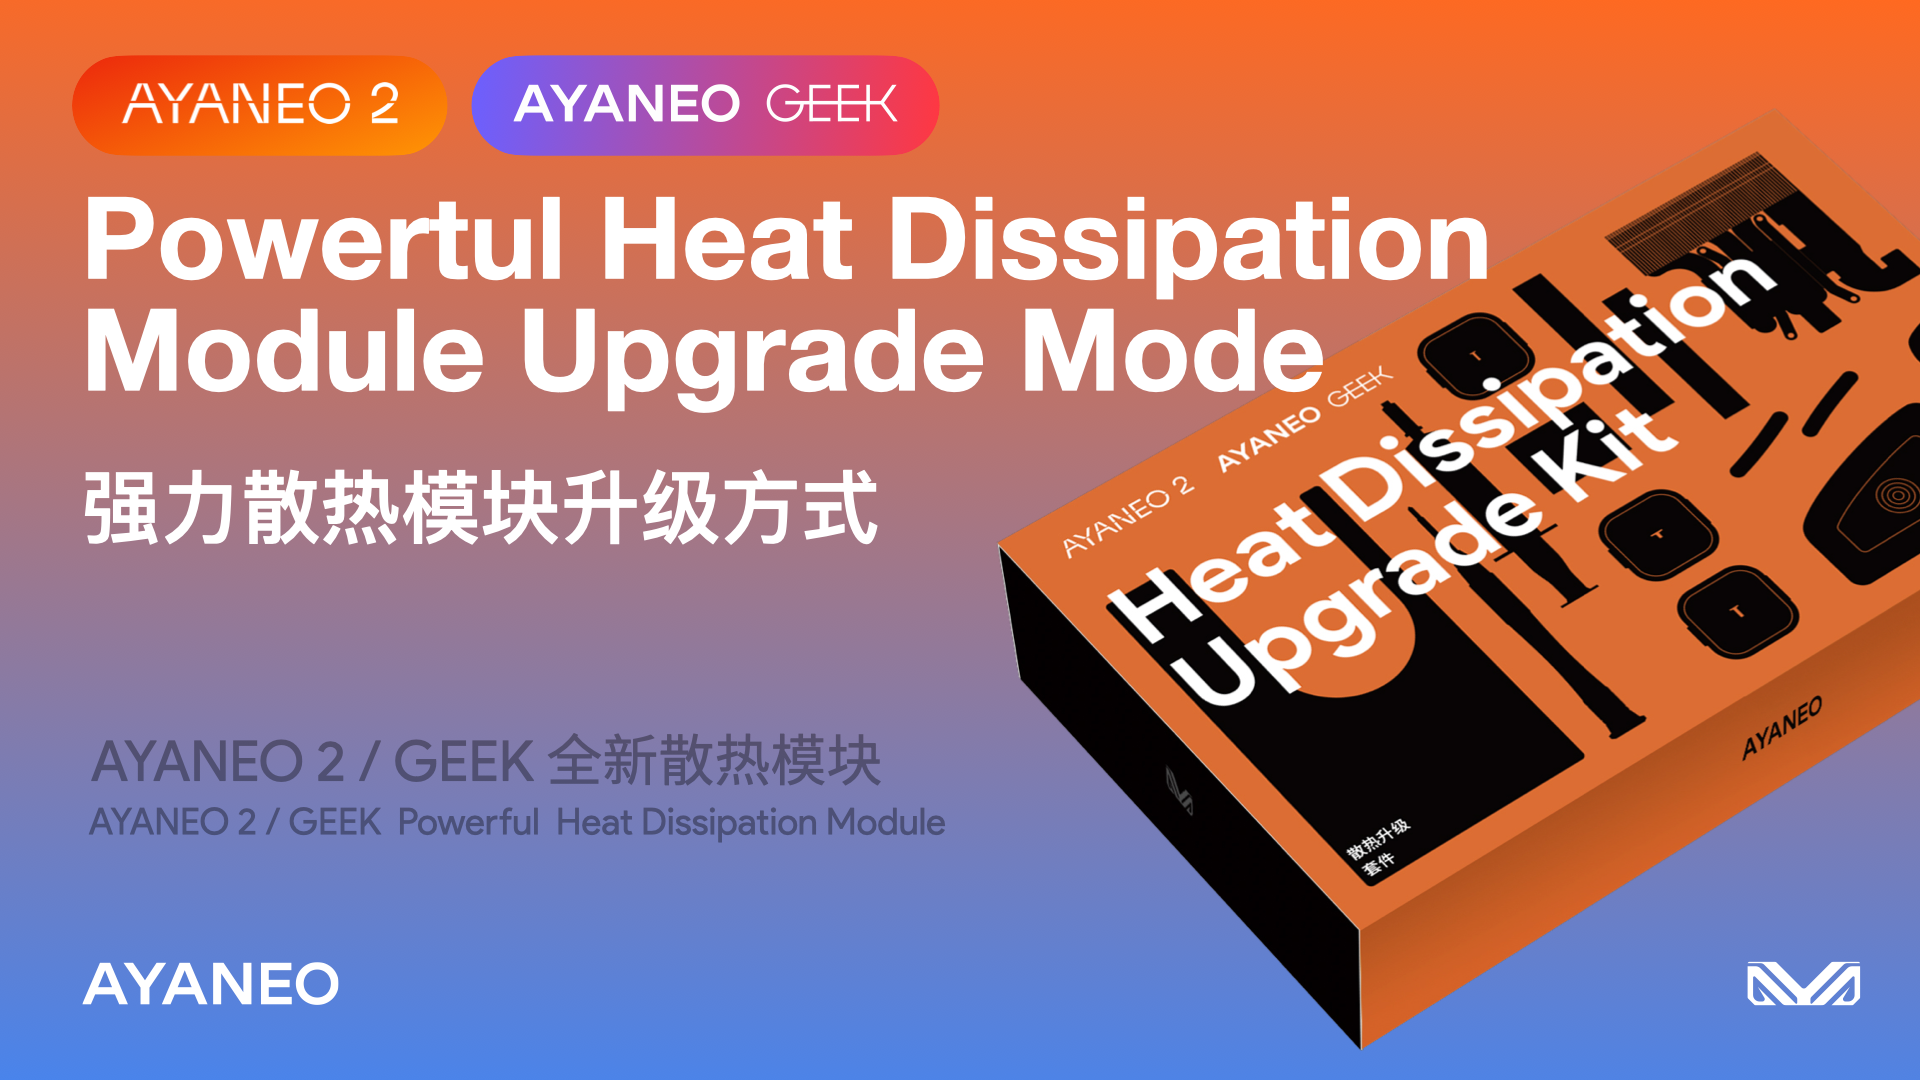 AYANEO 2  GEEK  Powertul Heat Dissipation Module Upgrade Mode